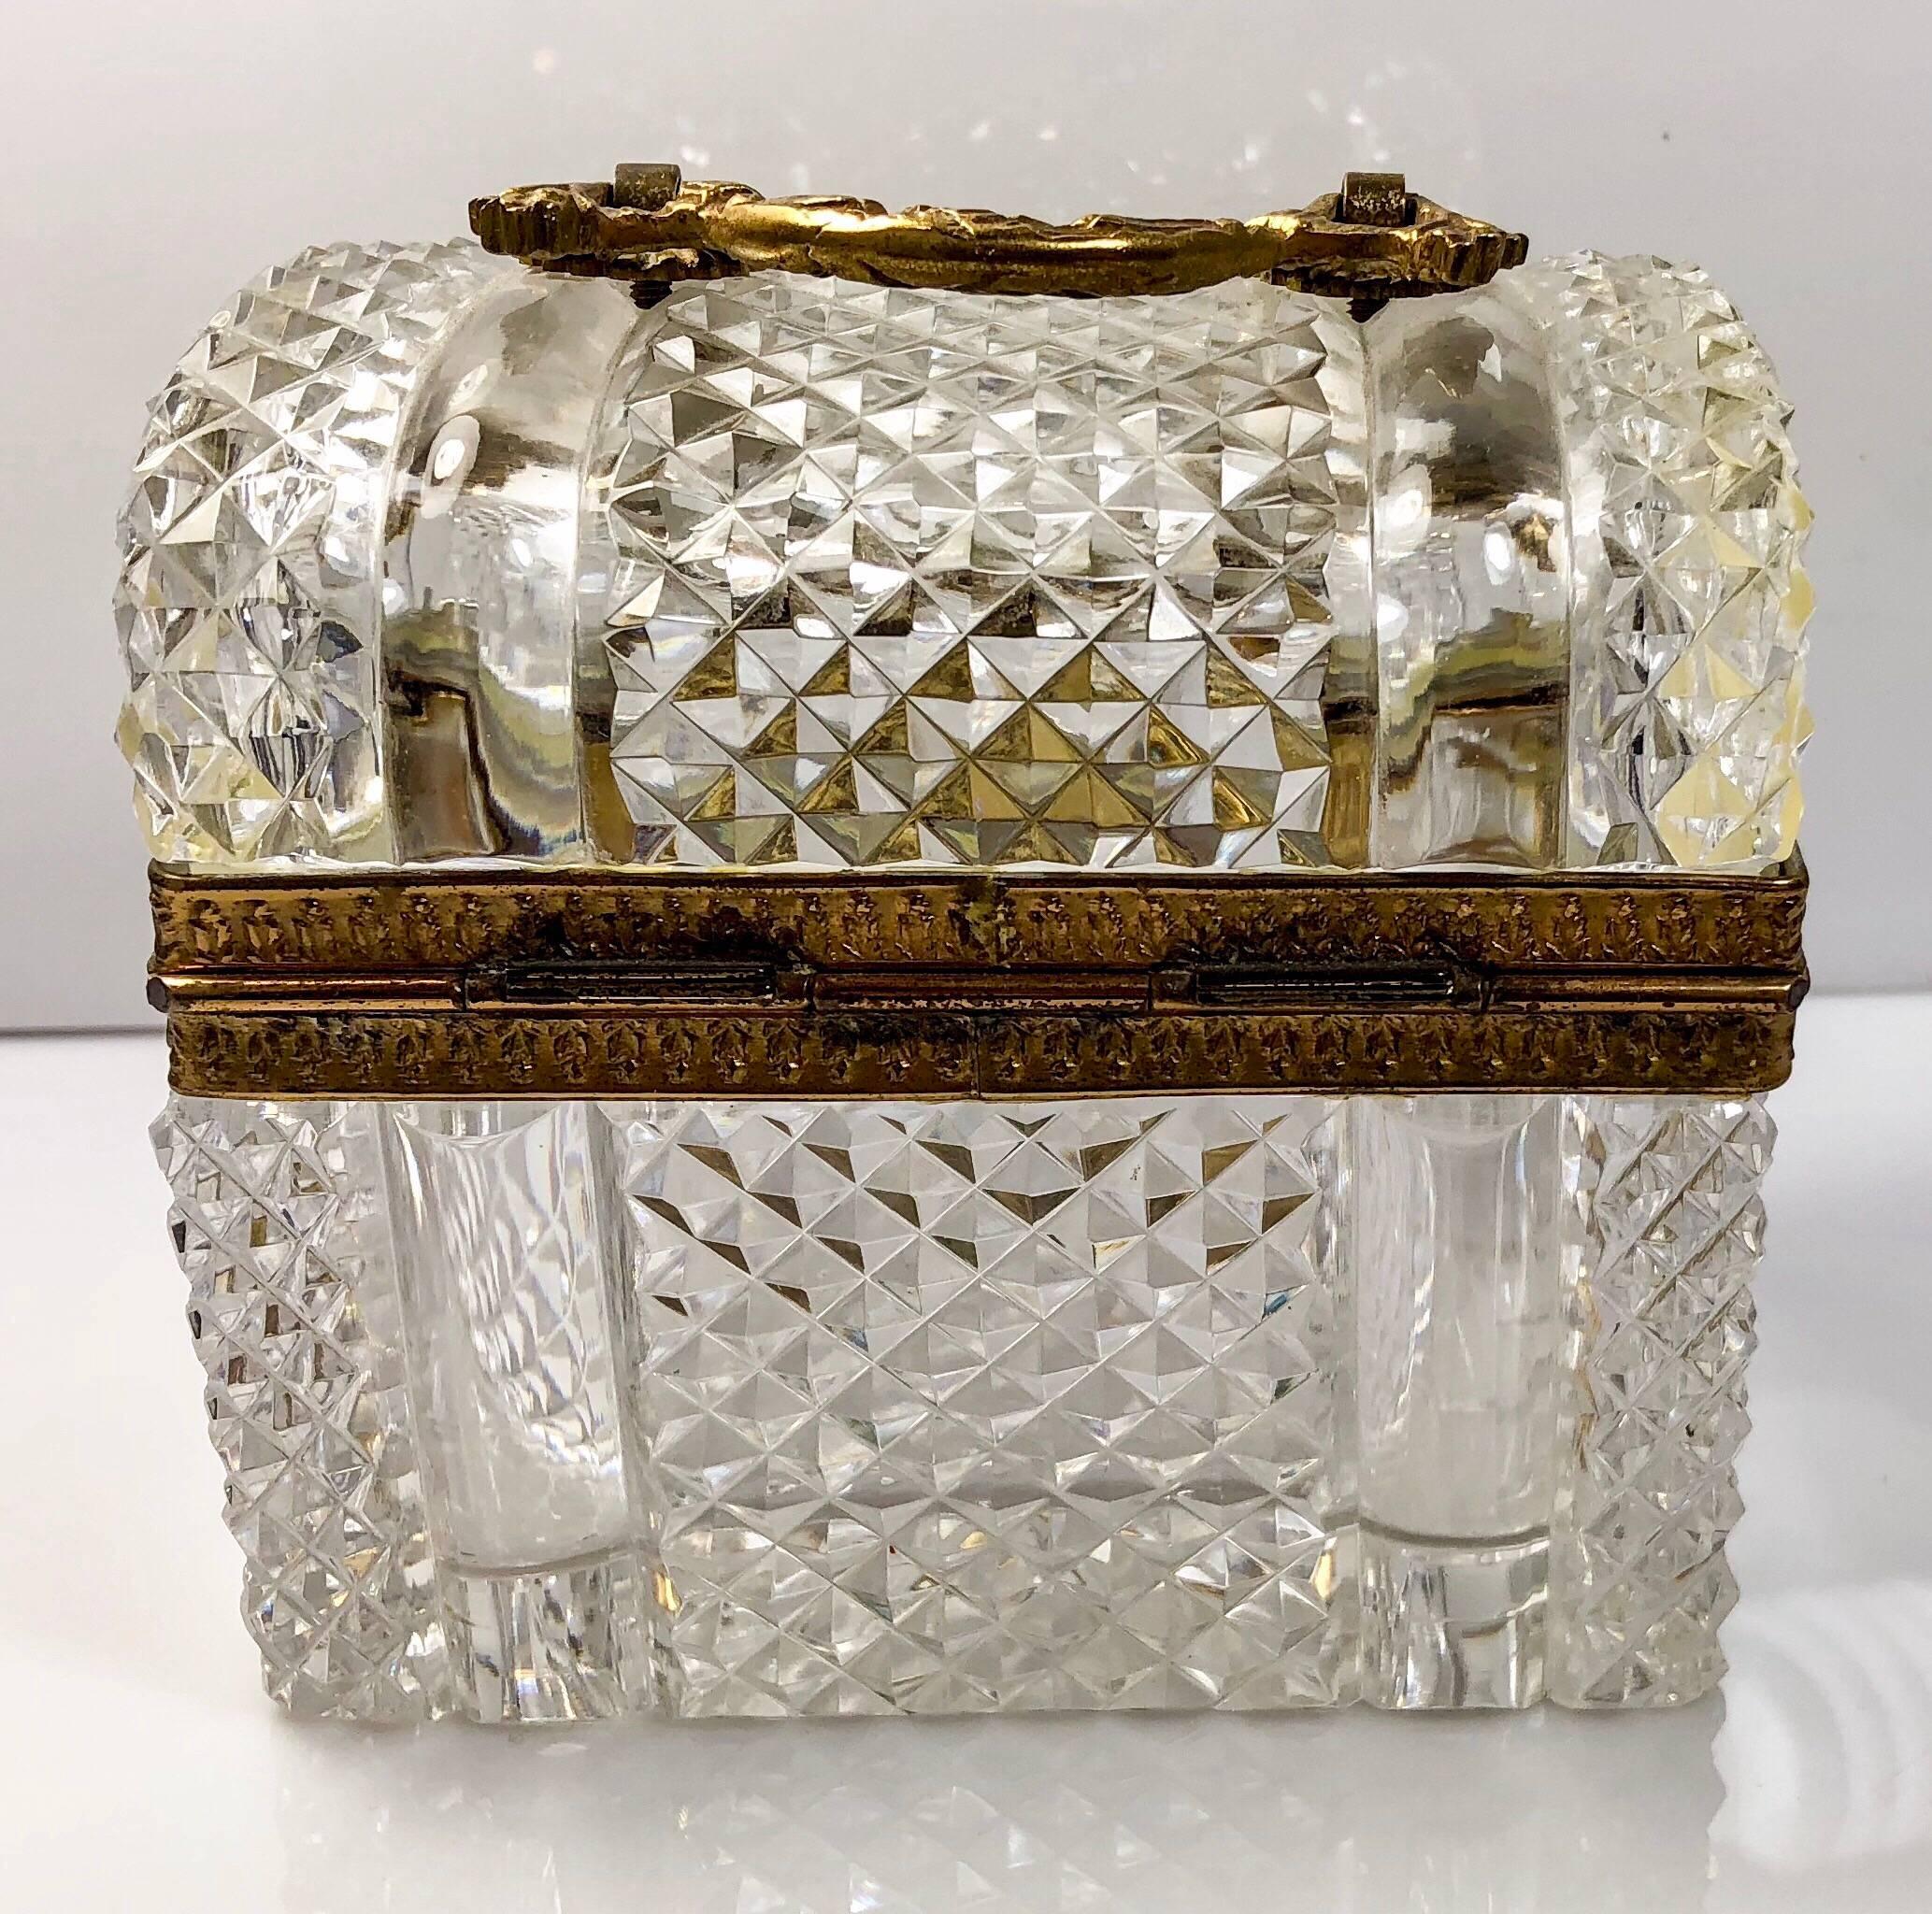 Antique French crystal and bronze doré jewel box, circa 1870.